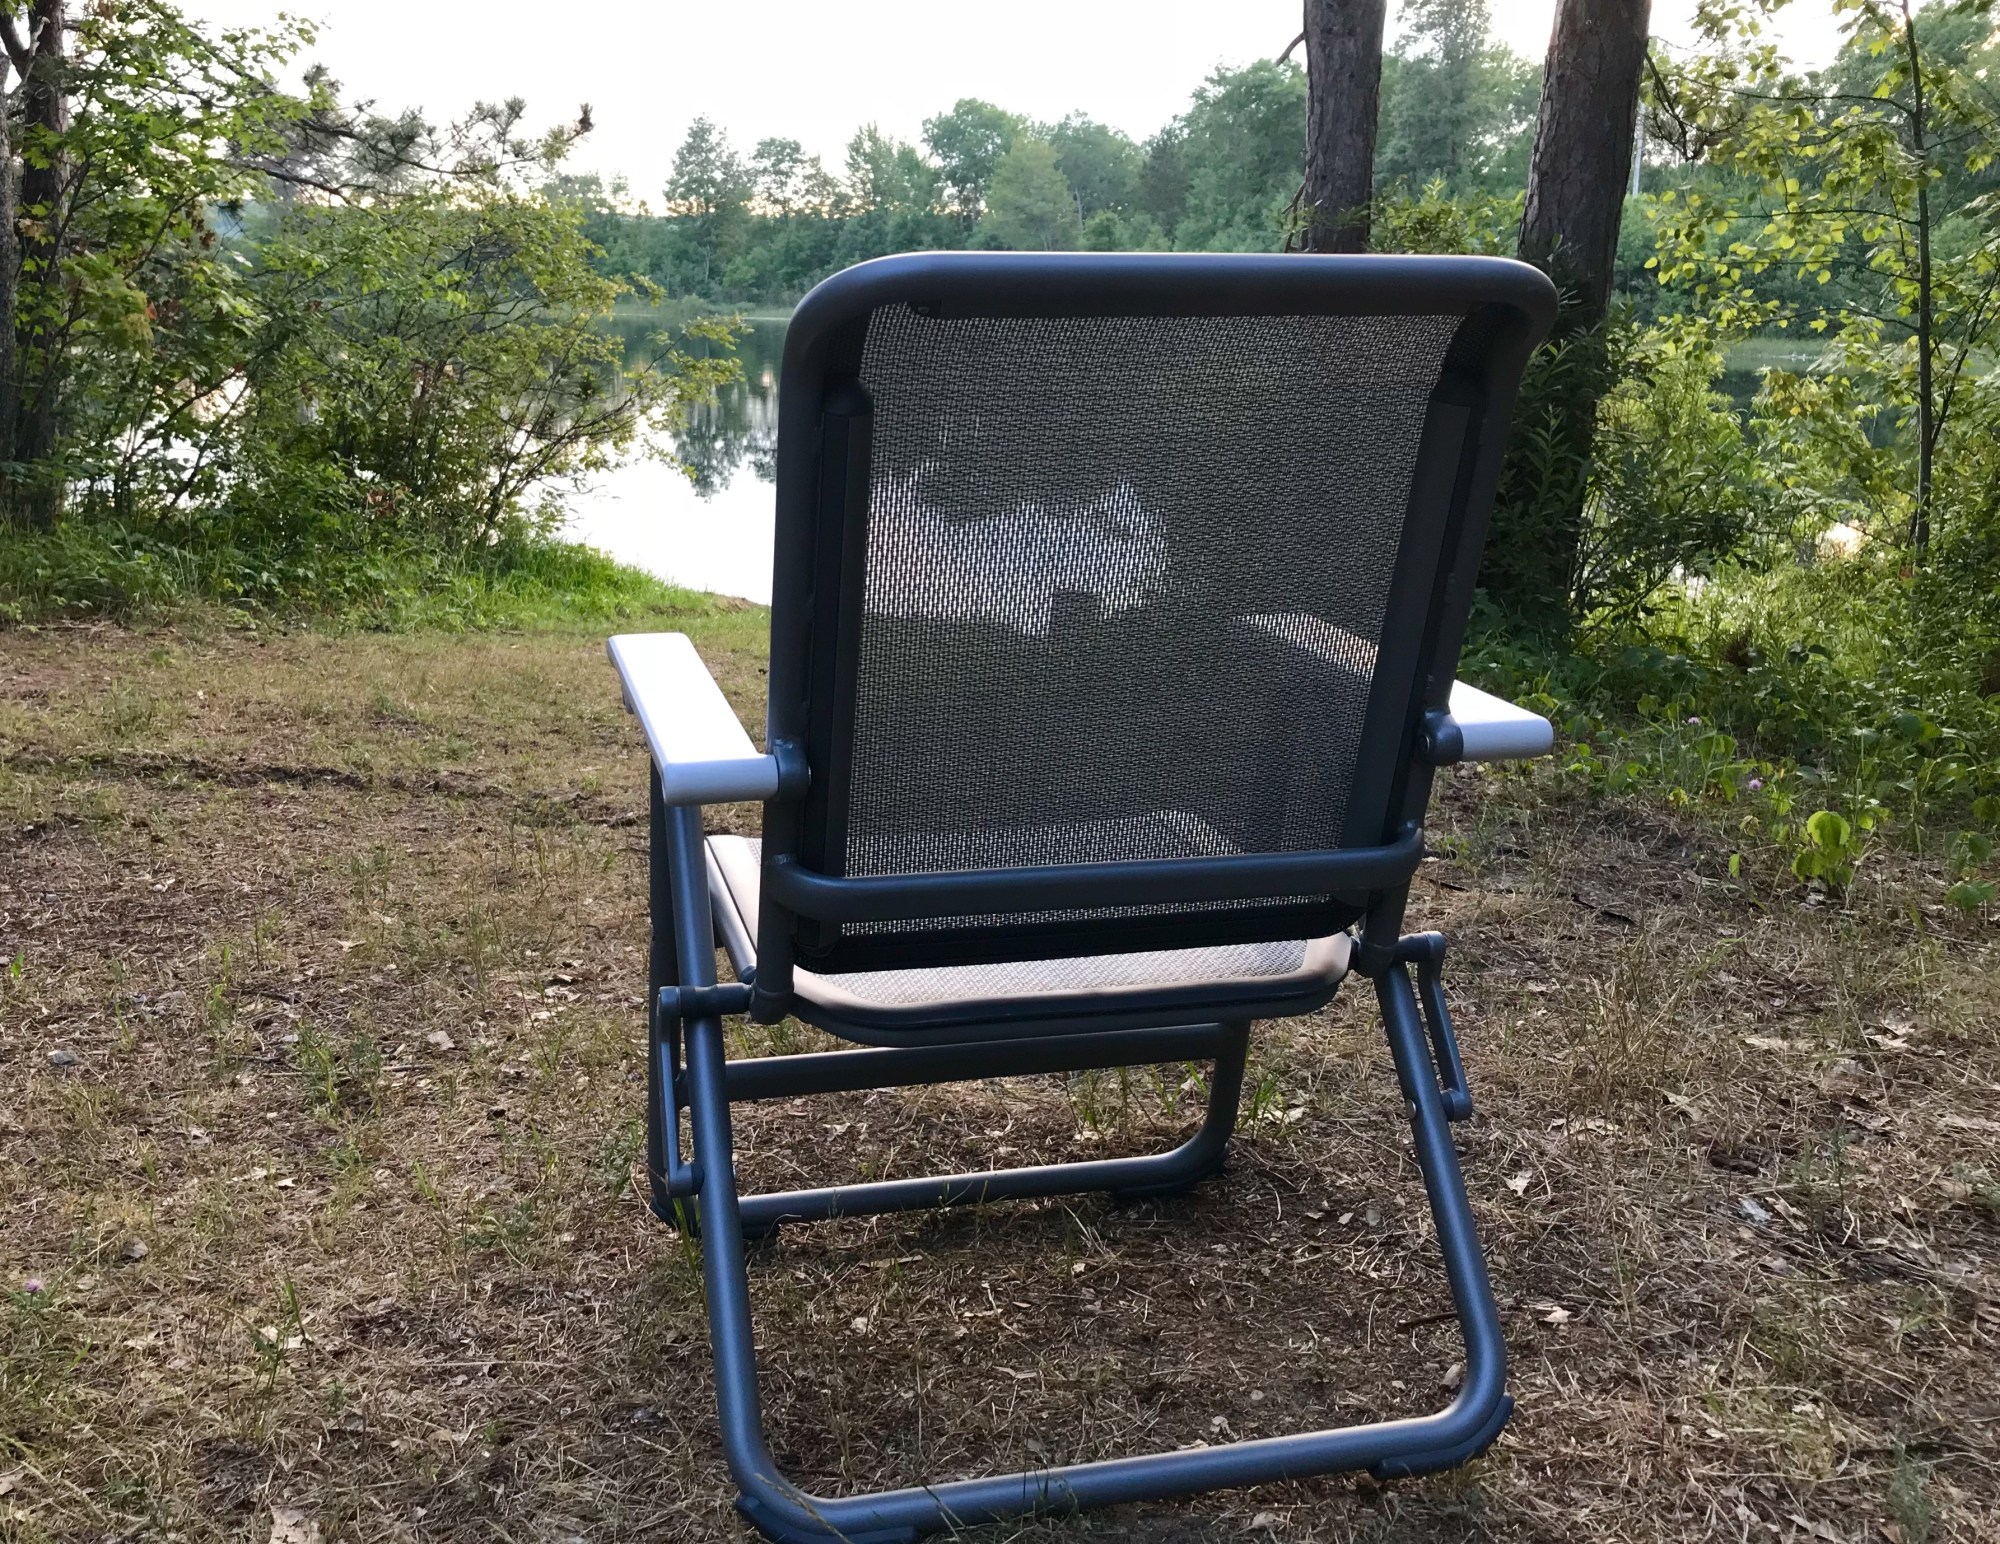 yeti camping chair